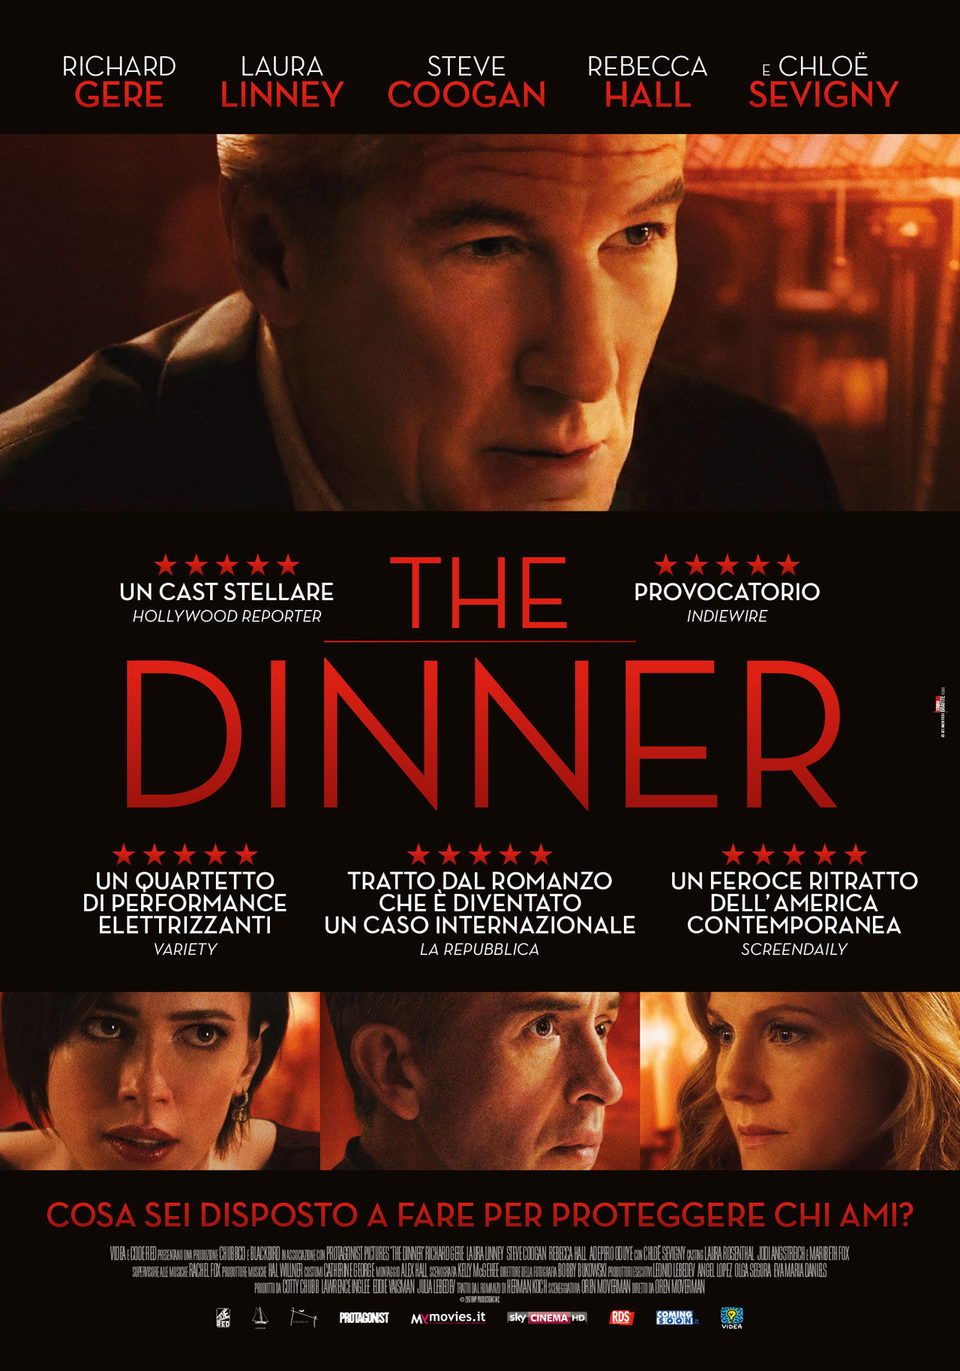 Poster #1 poster for The Dinner